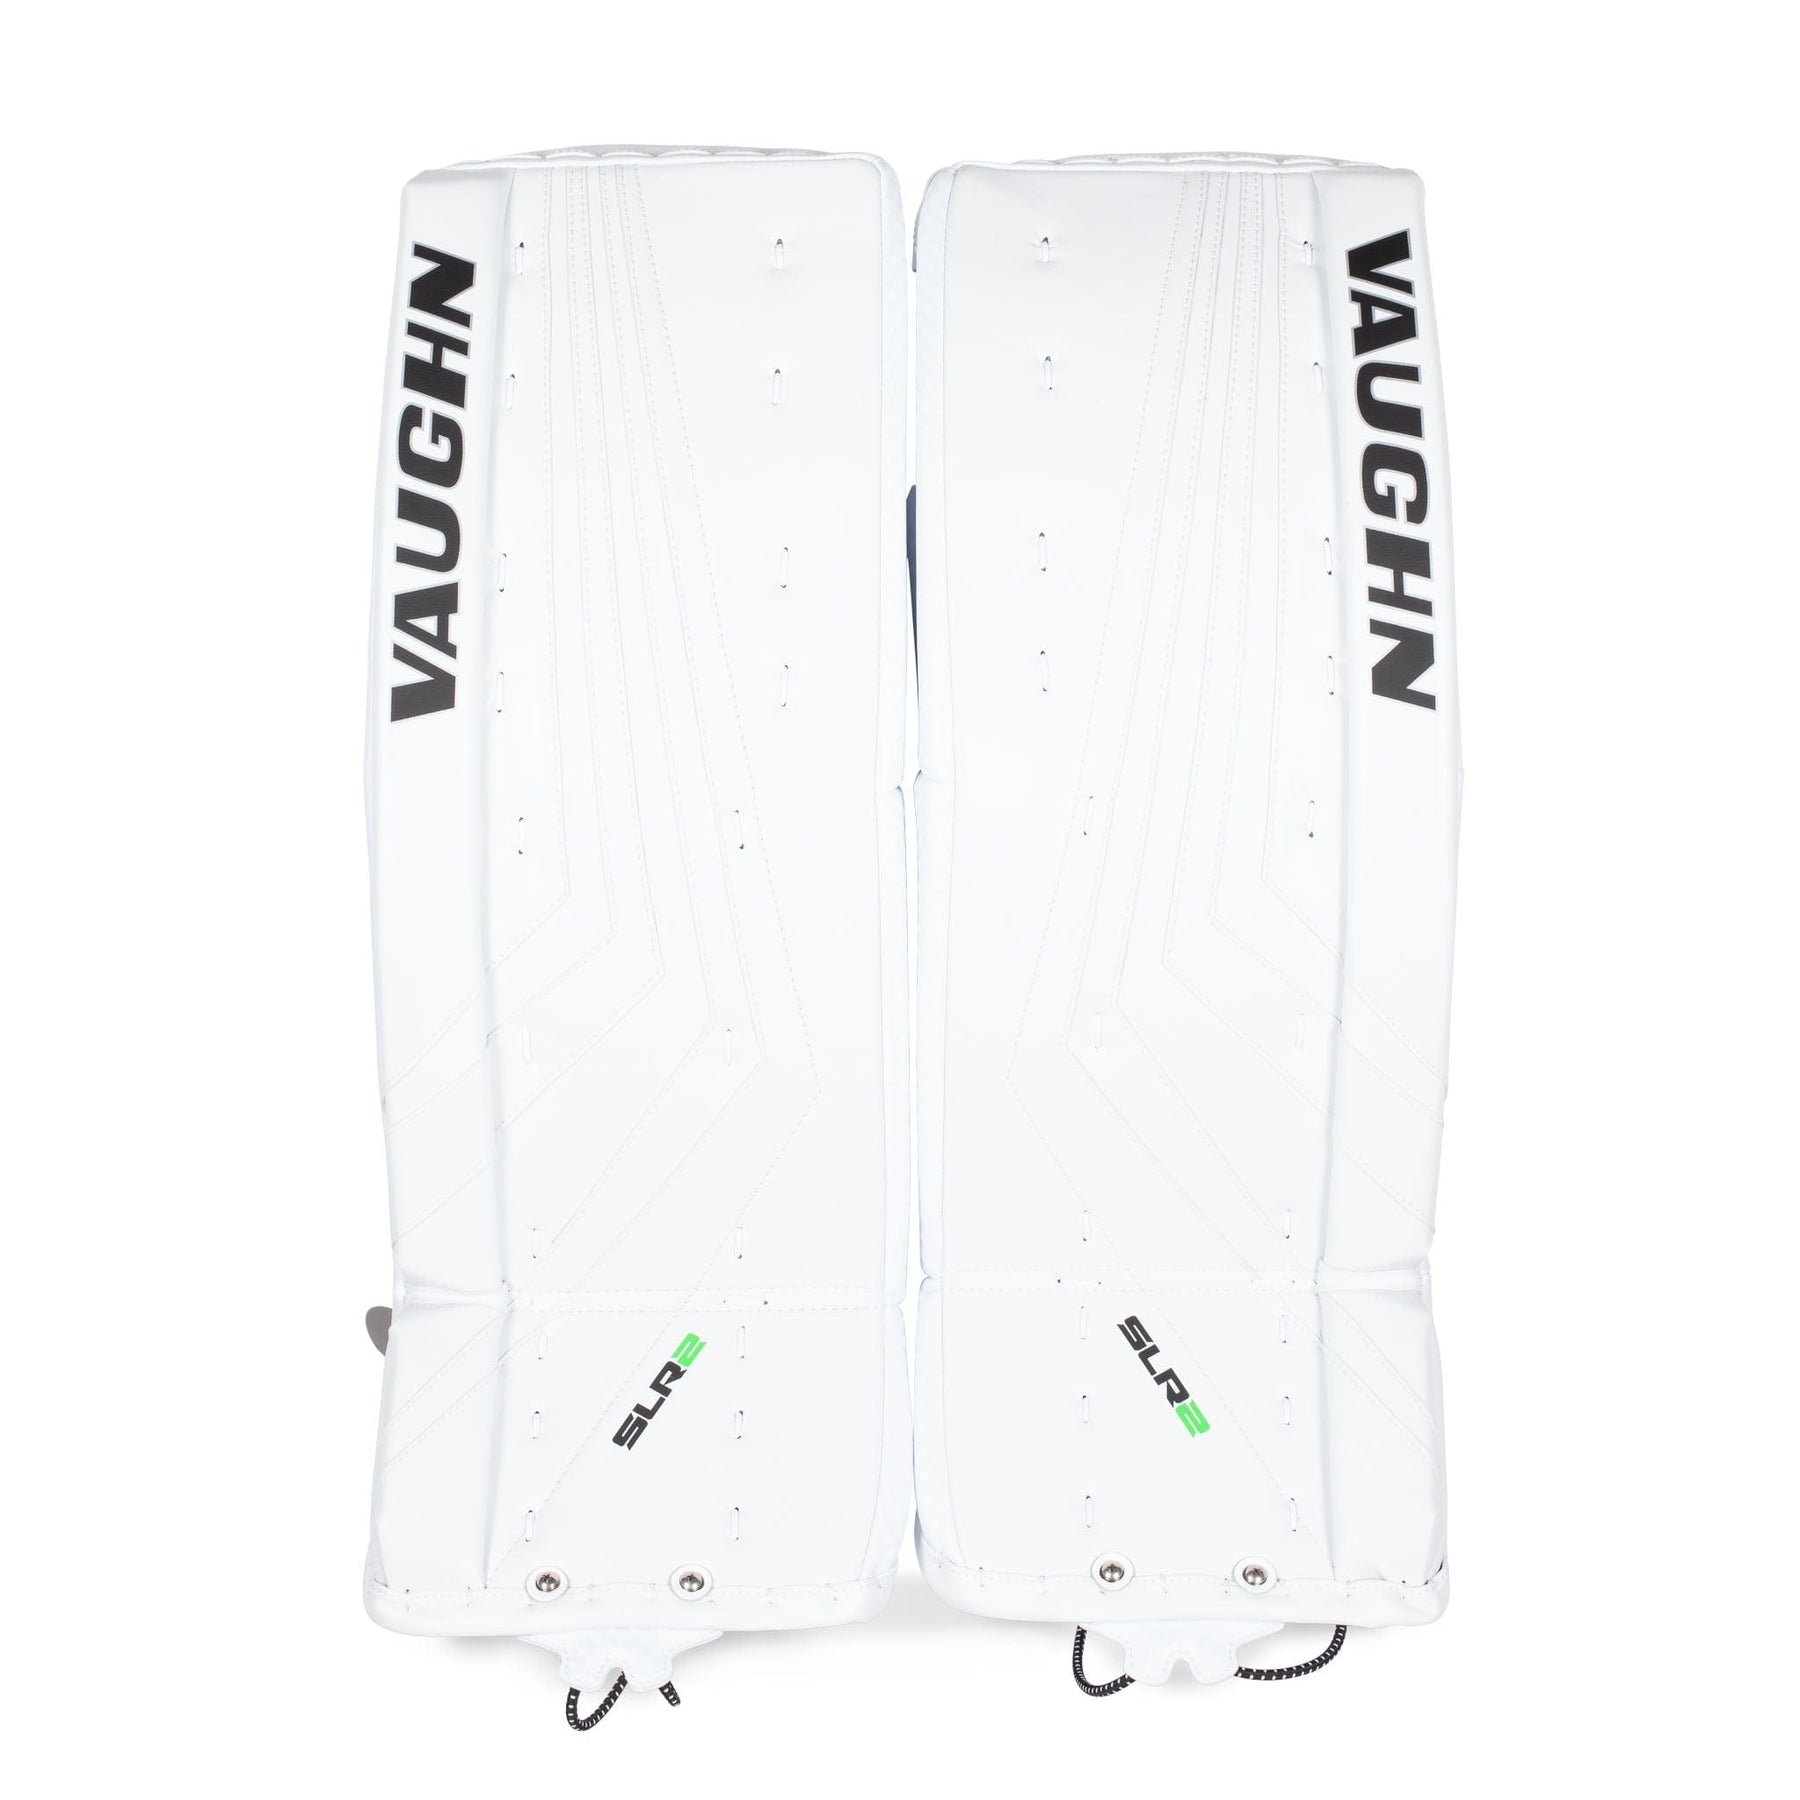 New Vaughn 1100 senior ice hockey goalie leg pads 35+2 Sr Velocity